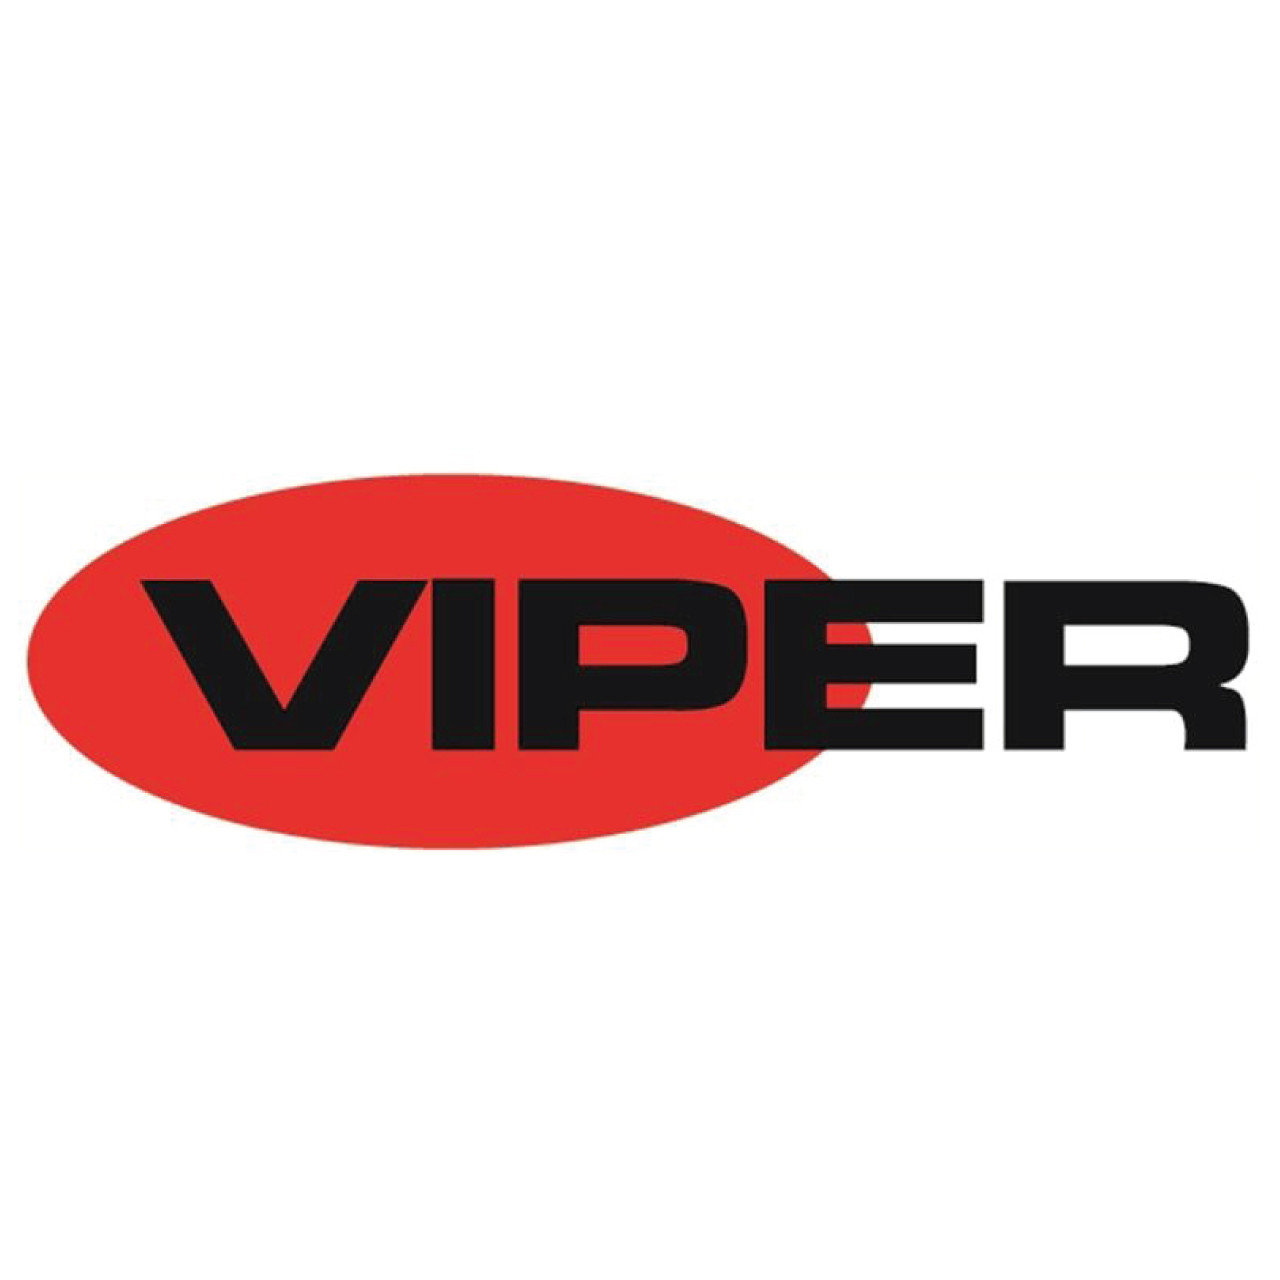 VIPER EQUIPMENT PART # 9100003418 CONTROLLER MAIN MACHINE PICTURE